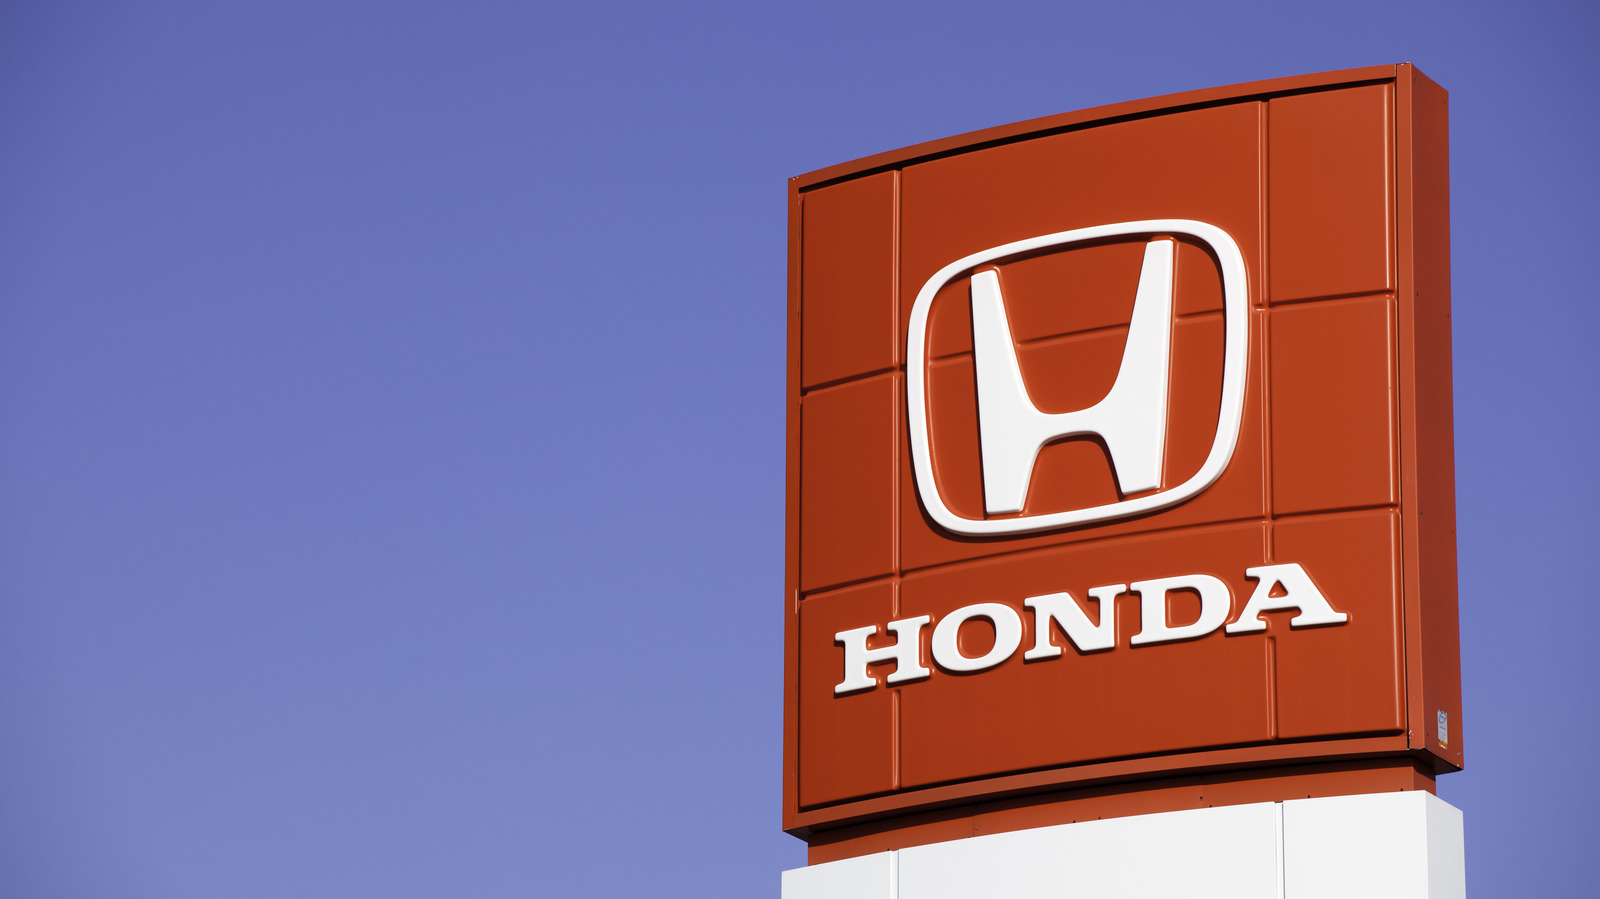 5 productos que probablemente no sabías que fabrica Honda